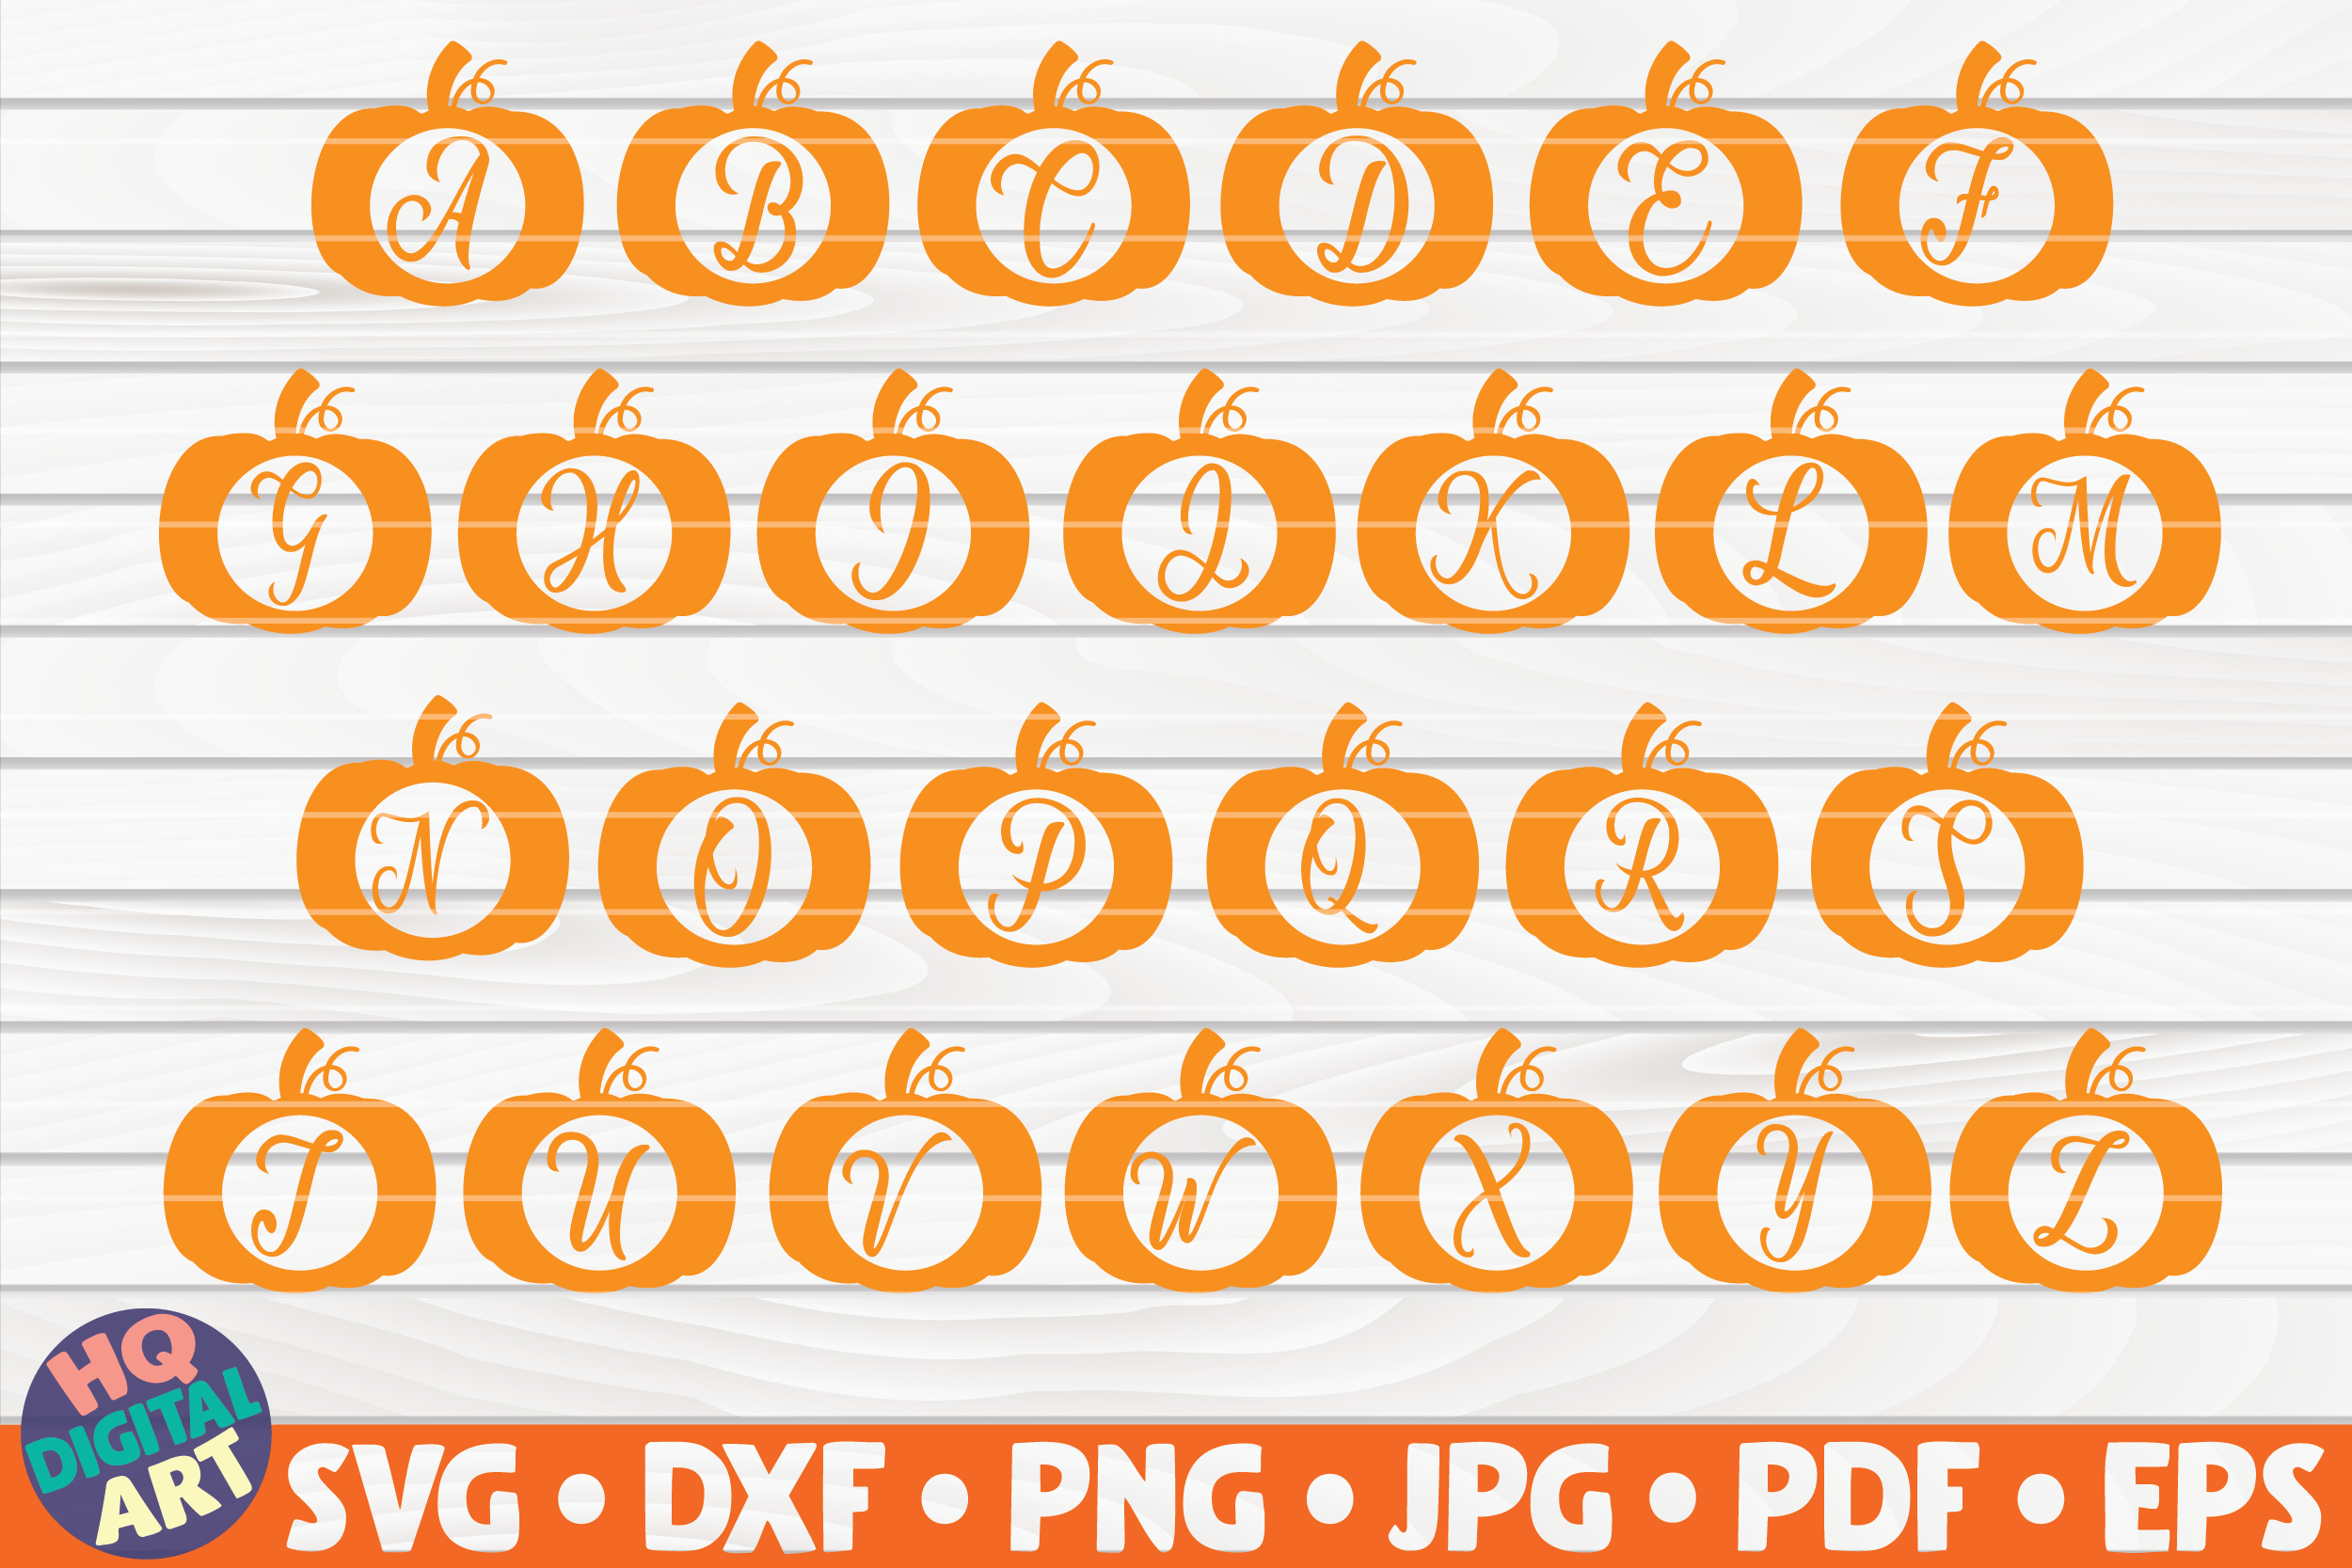 pumpkin-monogram-alphabet-script-font-letters-by-hqdigitalart